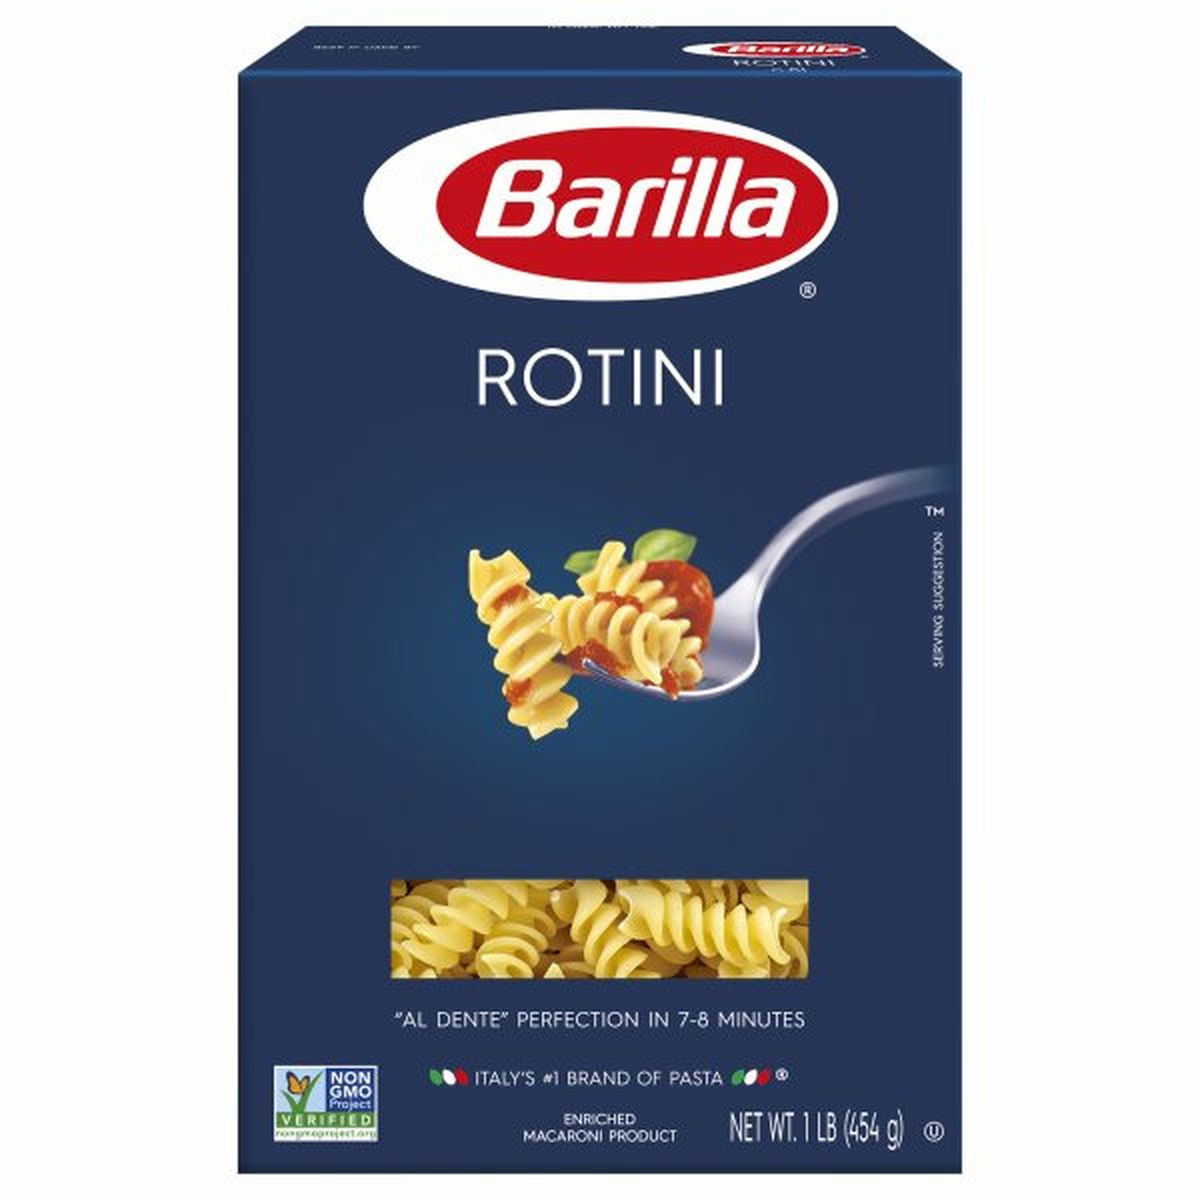 Calories in Barillas Rotini